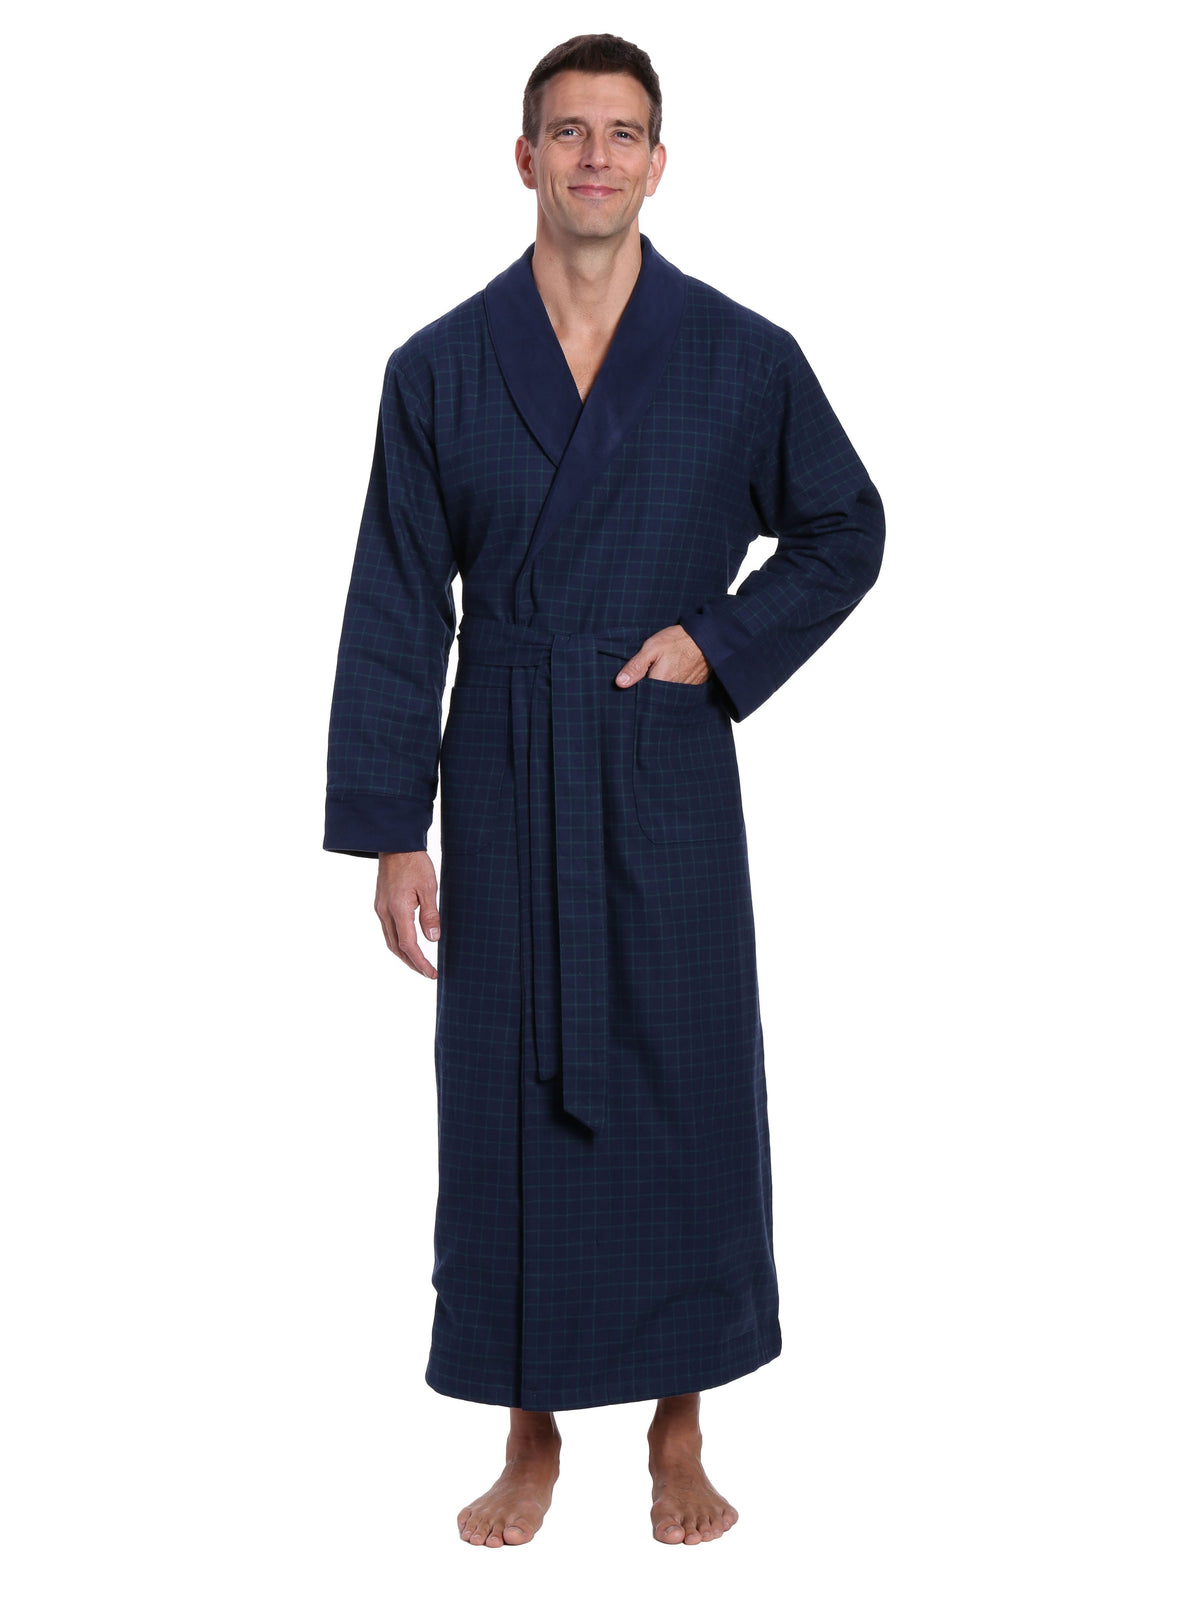 Men's Premium 100% Cotton Flannel Fleece Lined Robe - Windowpane Checks - Navy Green